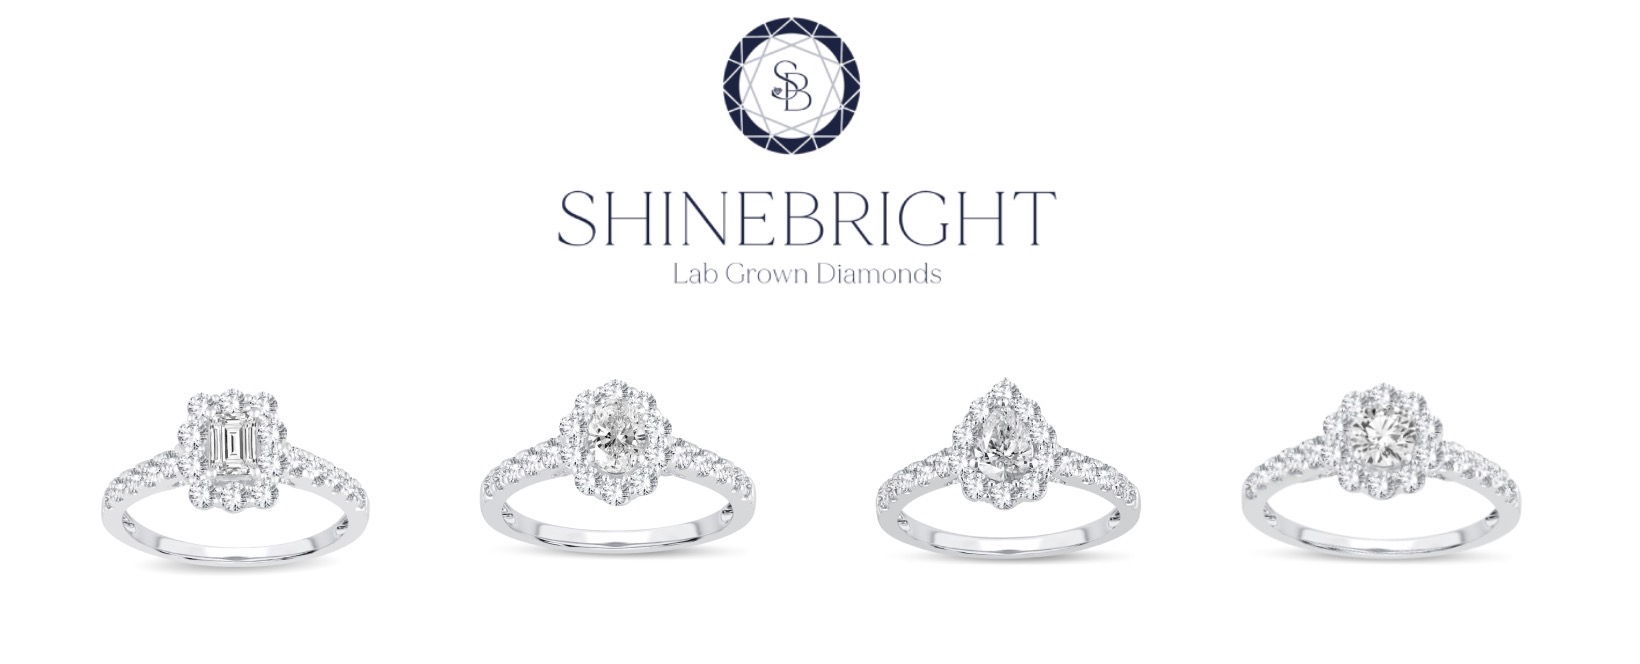 Shinebright USA Inc